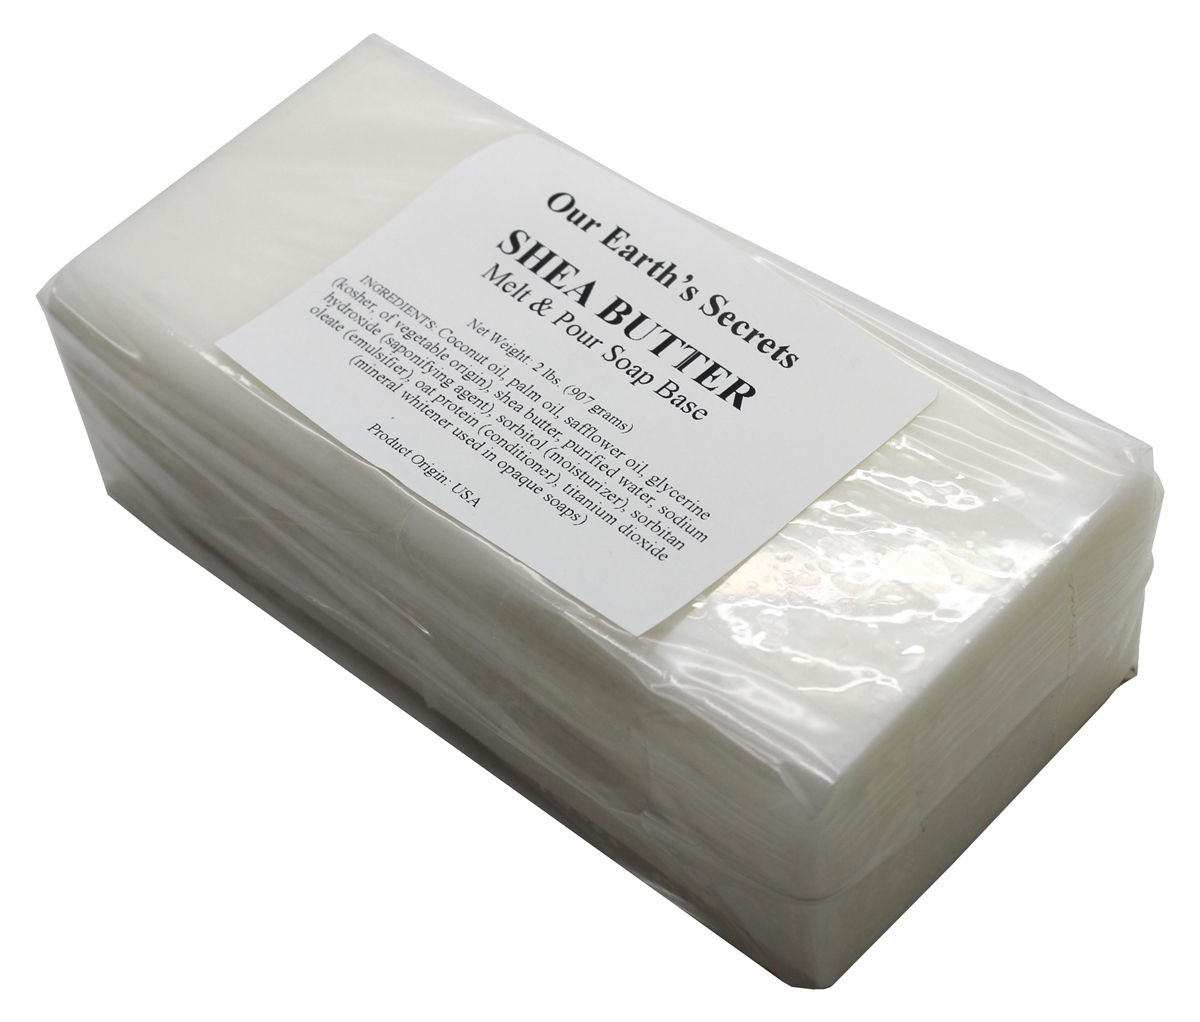 Soap & Melt Shea Butter organic and natural buy